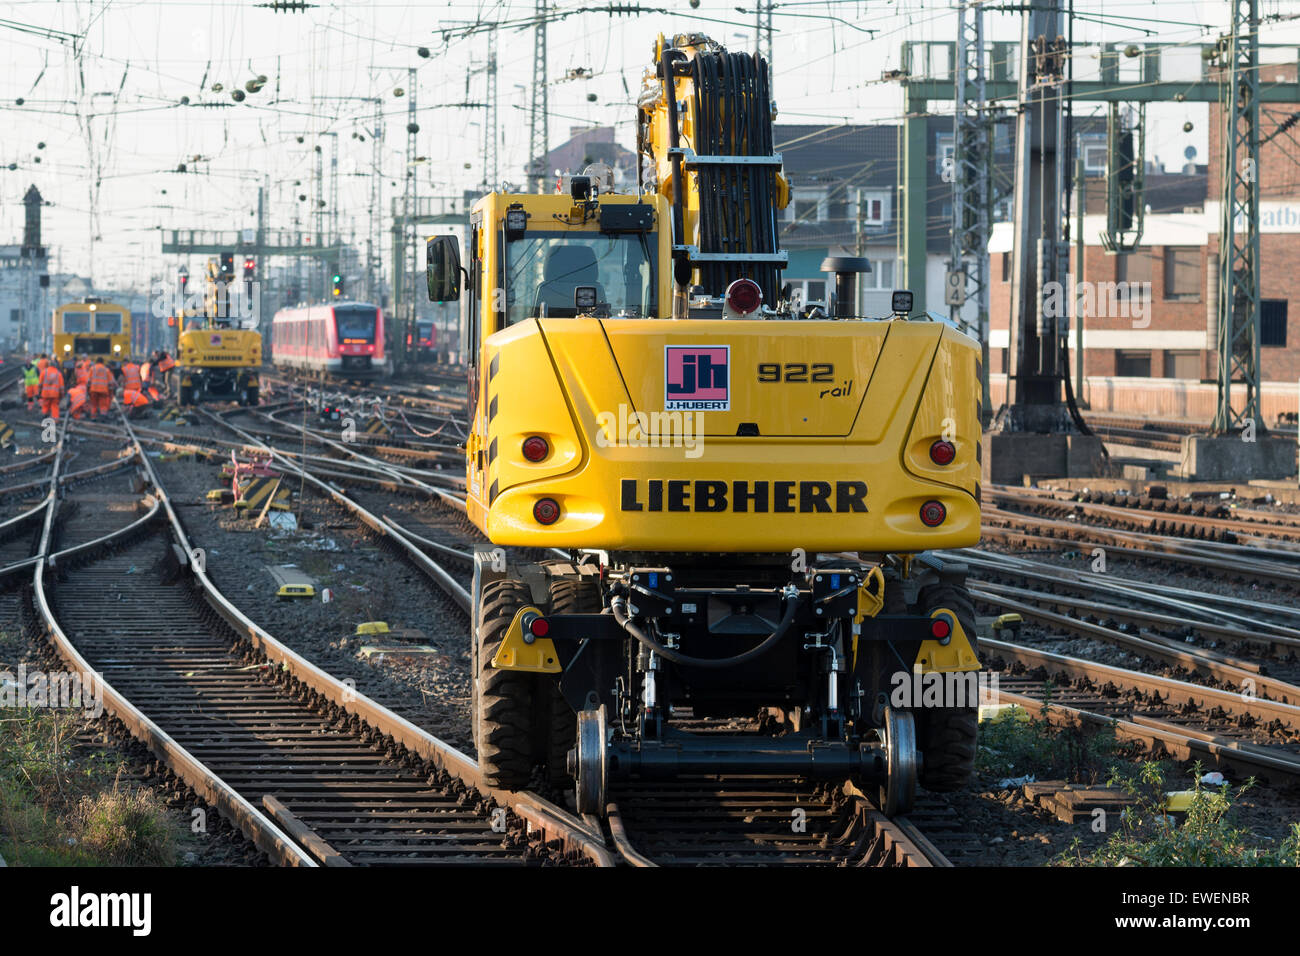 Liebherr 922 Rail to road crane, Cologne, Germany. Stock Photo